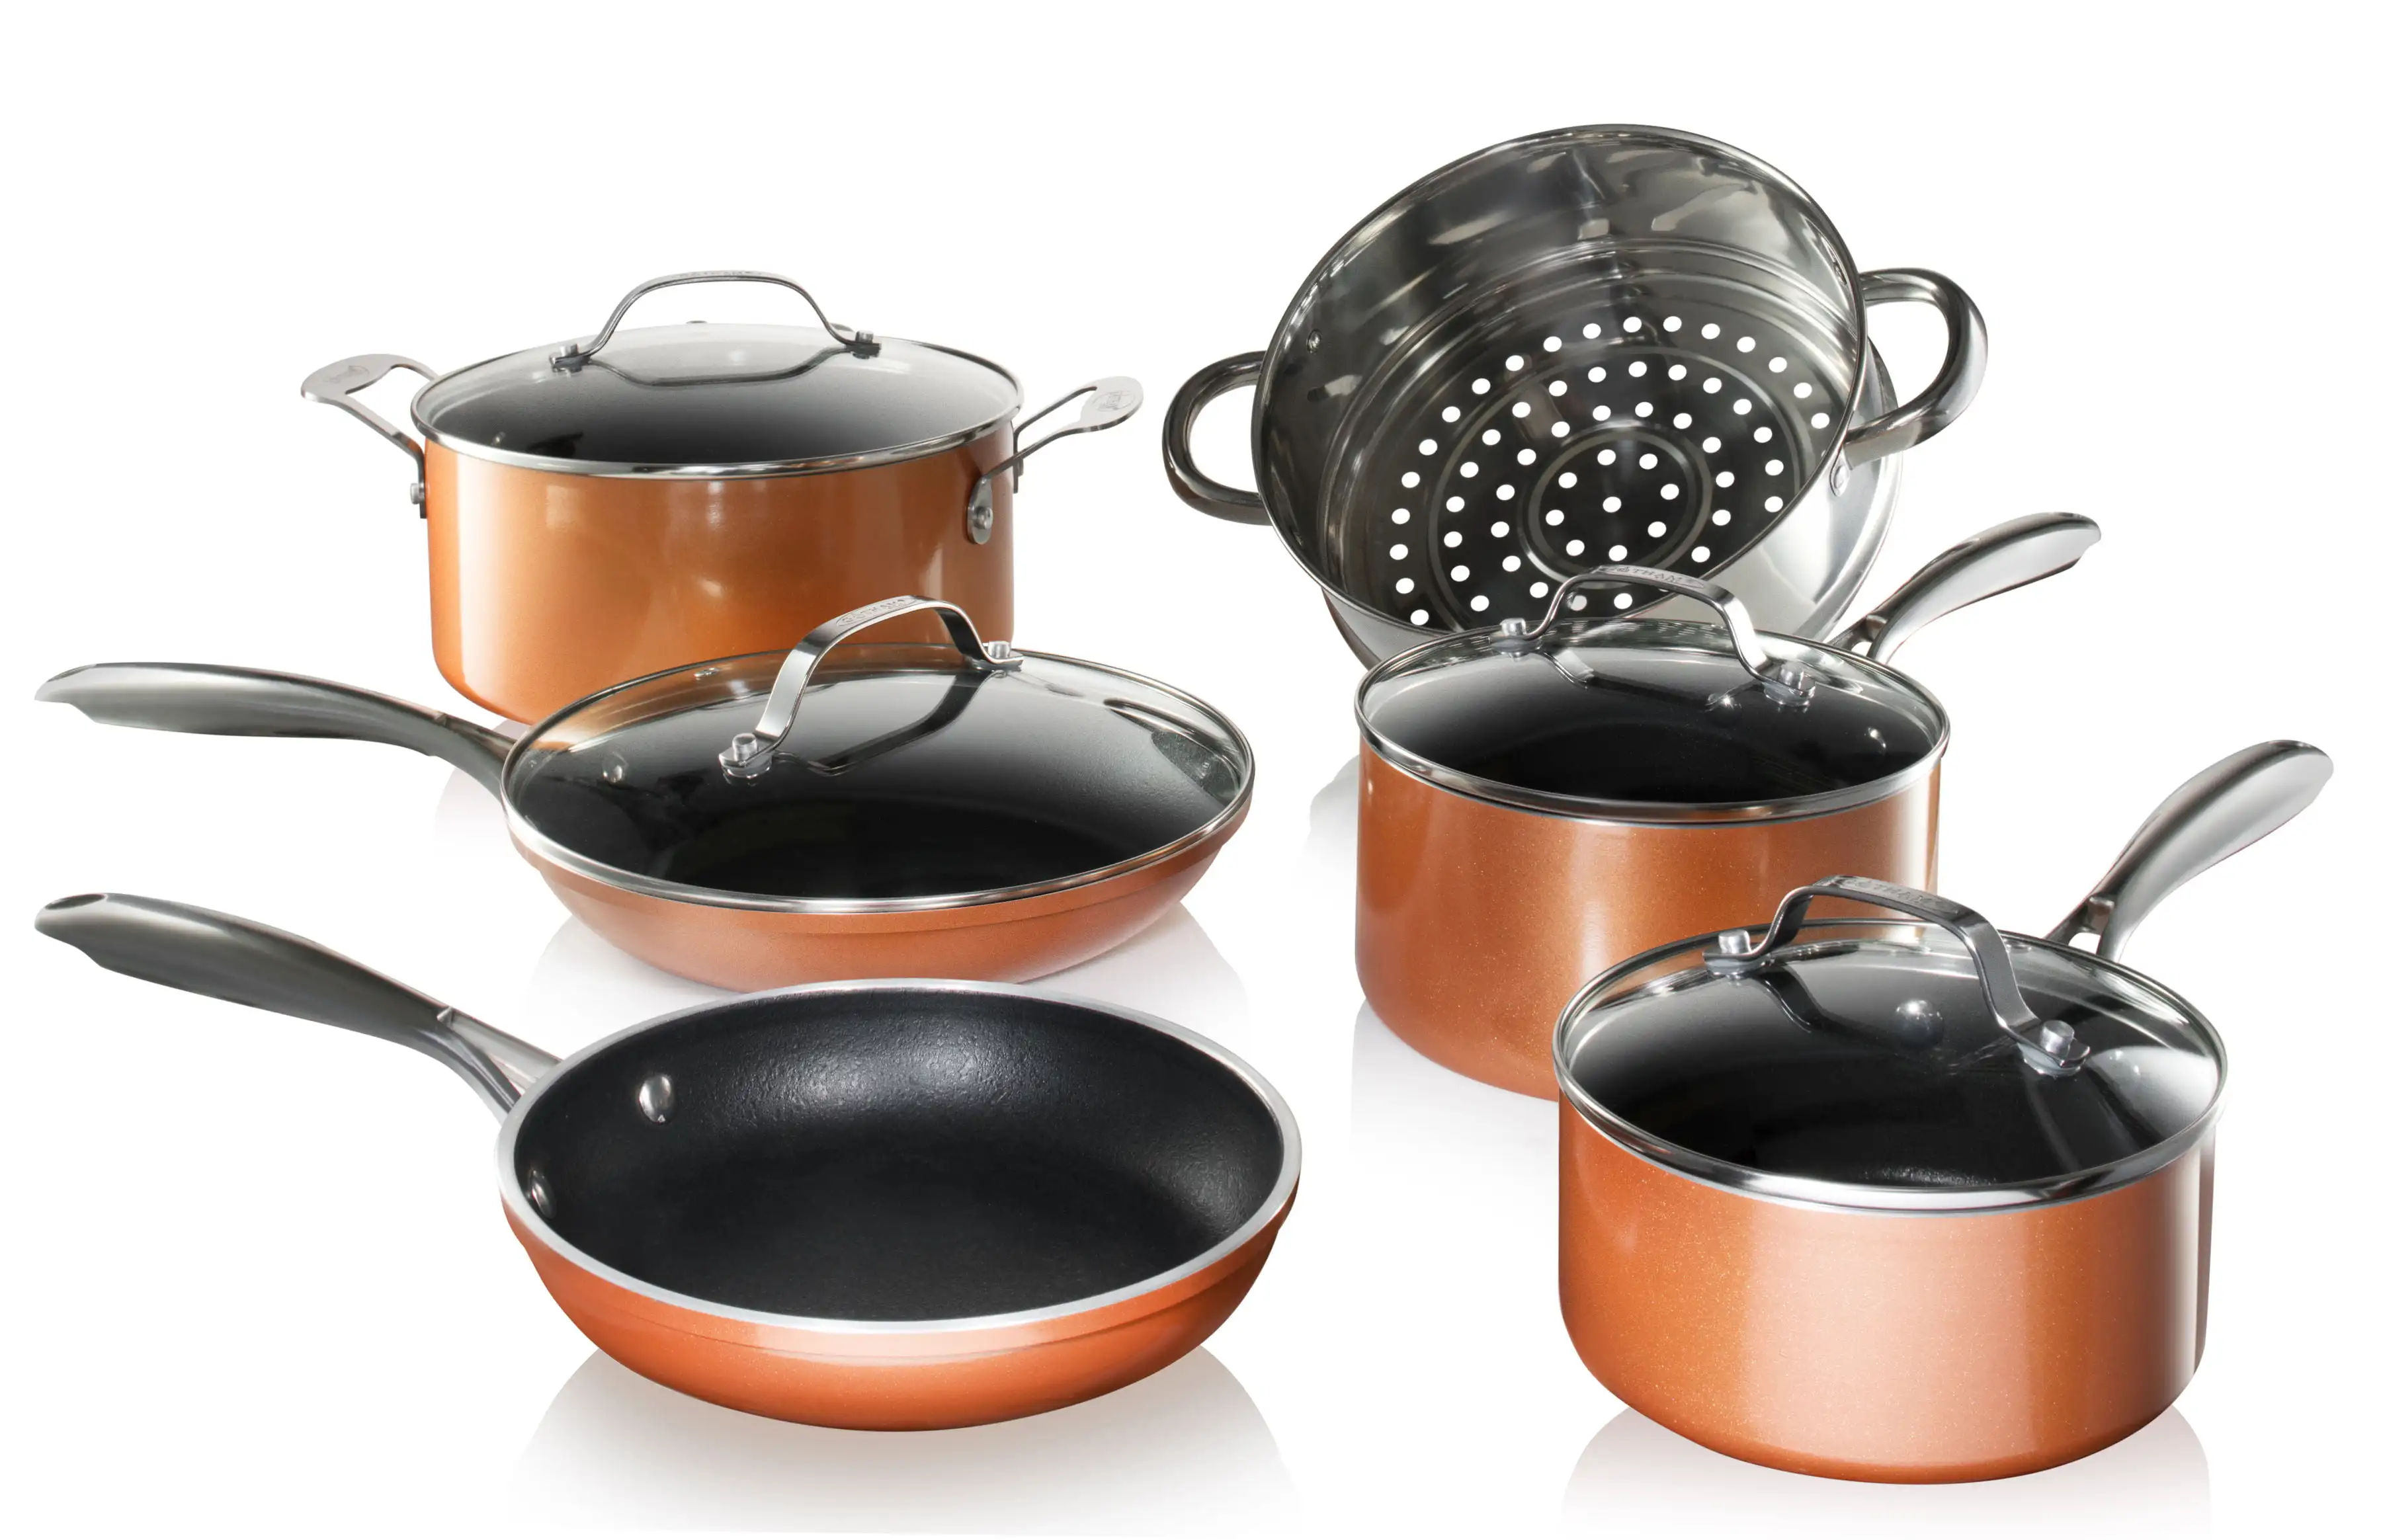 

Copper Cast Pots and Pans Set, 10 Piece Cookware with Nonstick Diamond Surface, Includes Frying Pans, Stock Pots